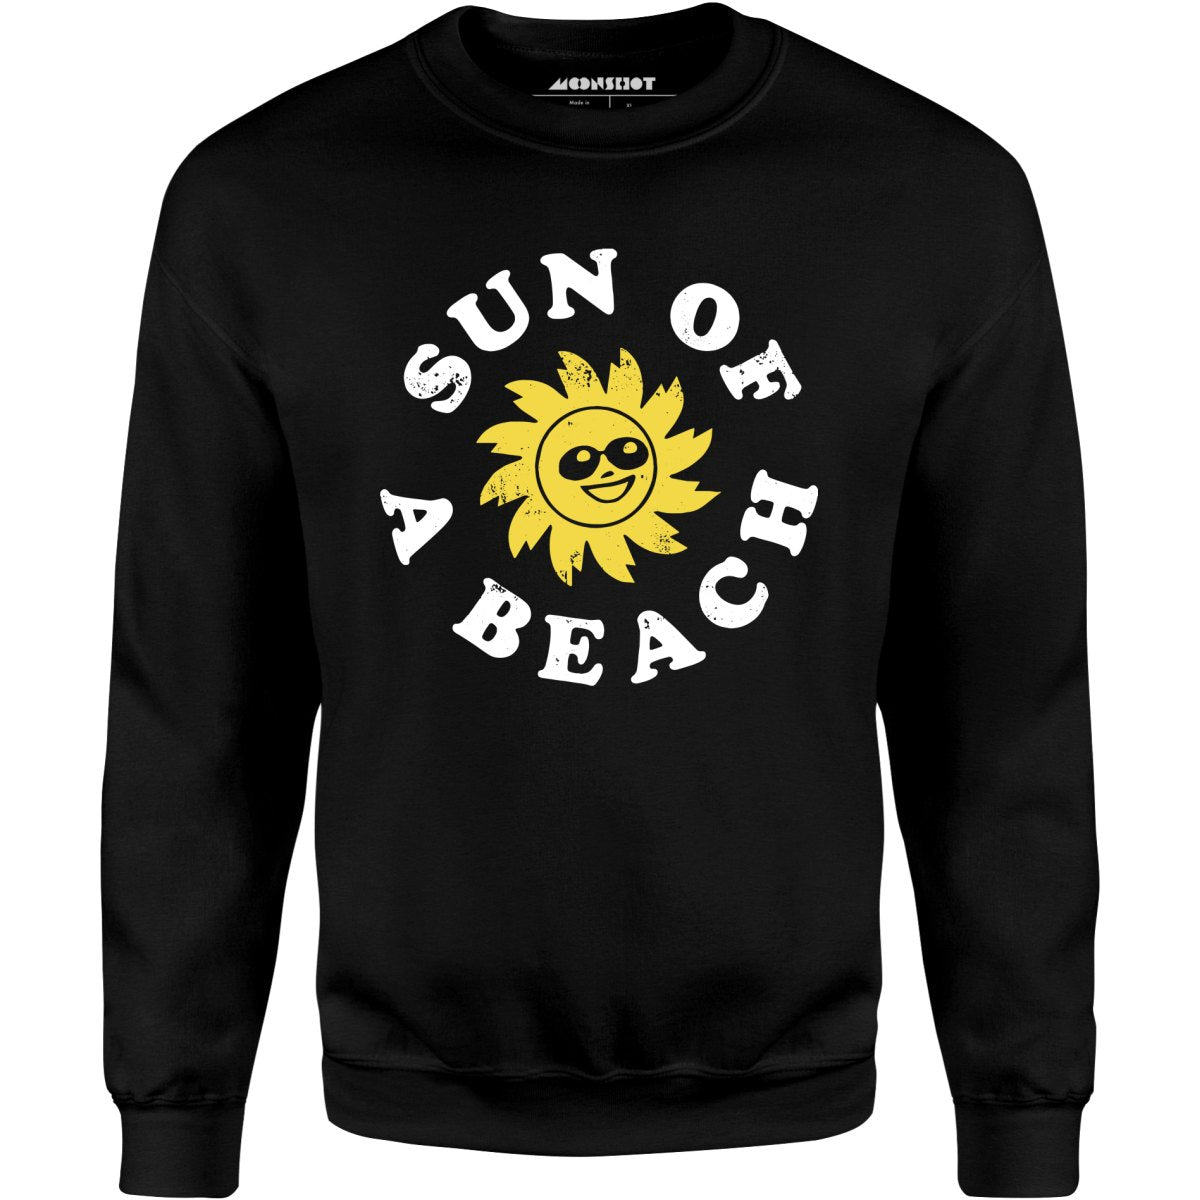 Sun of a Beach - Unisex Sweatshirt